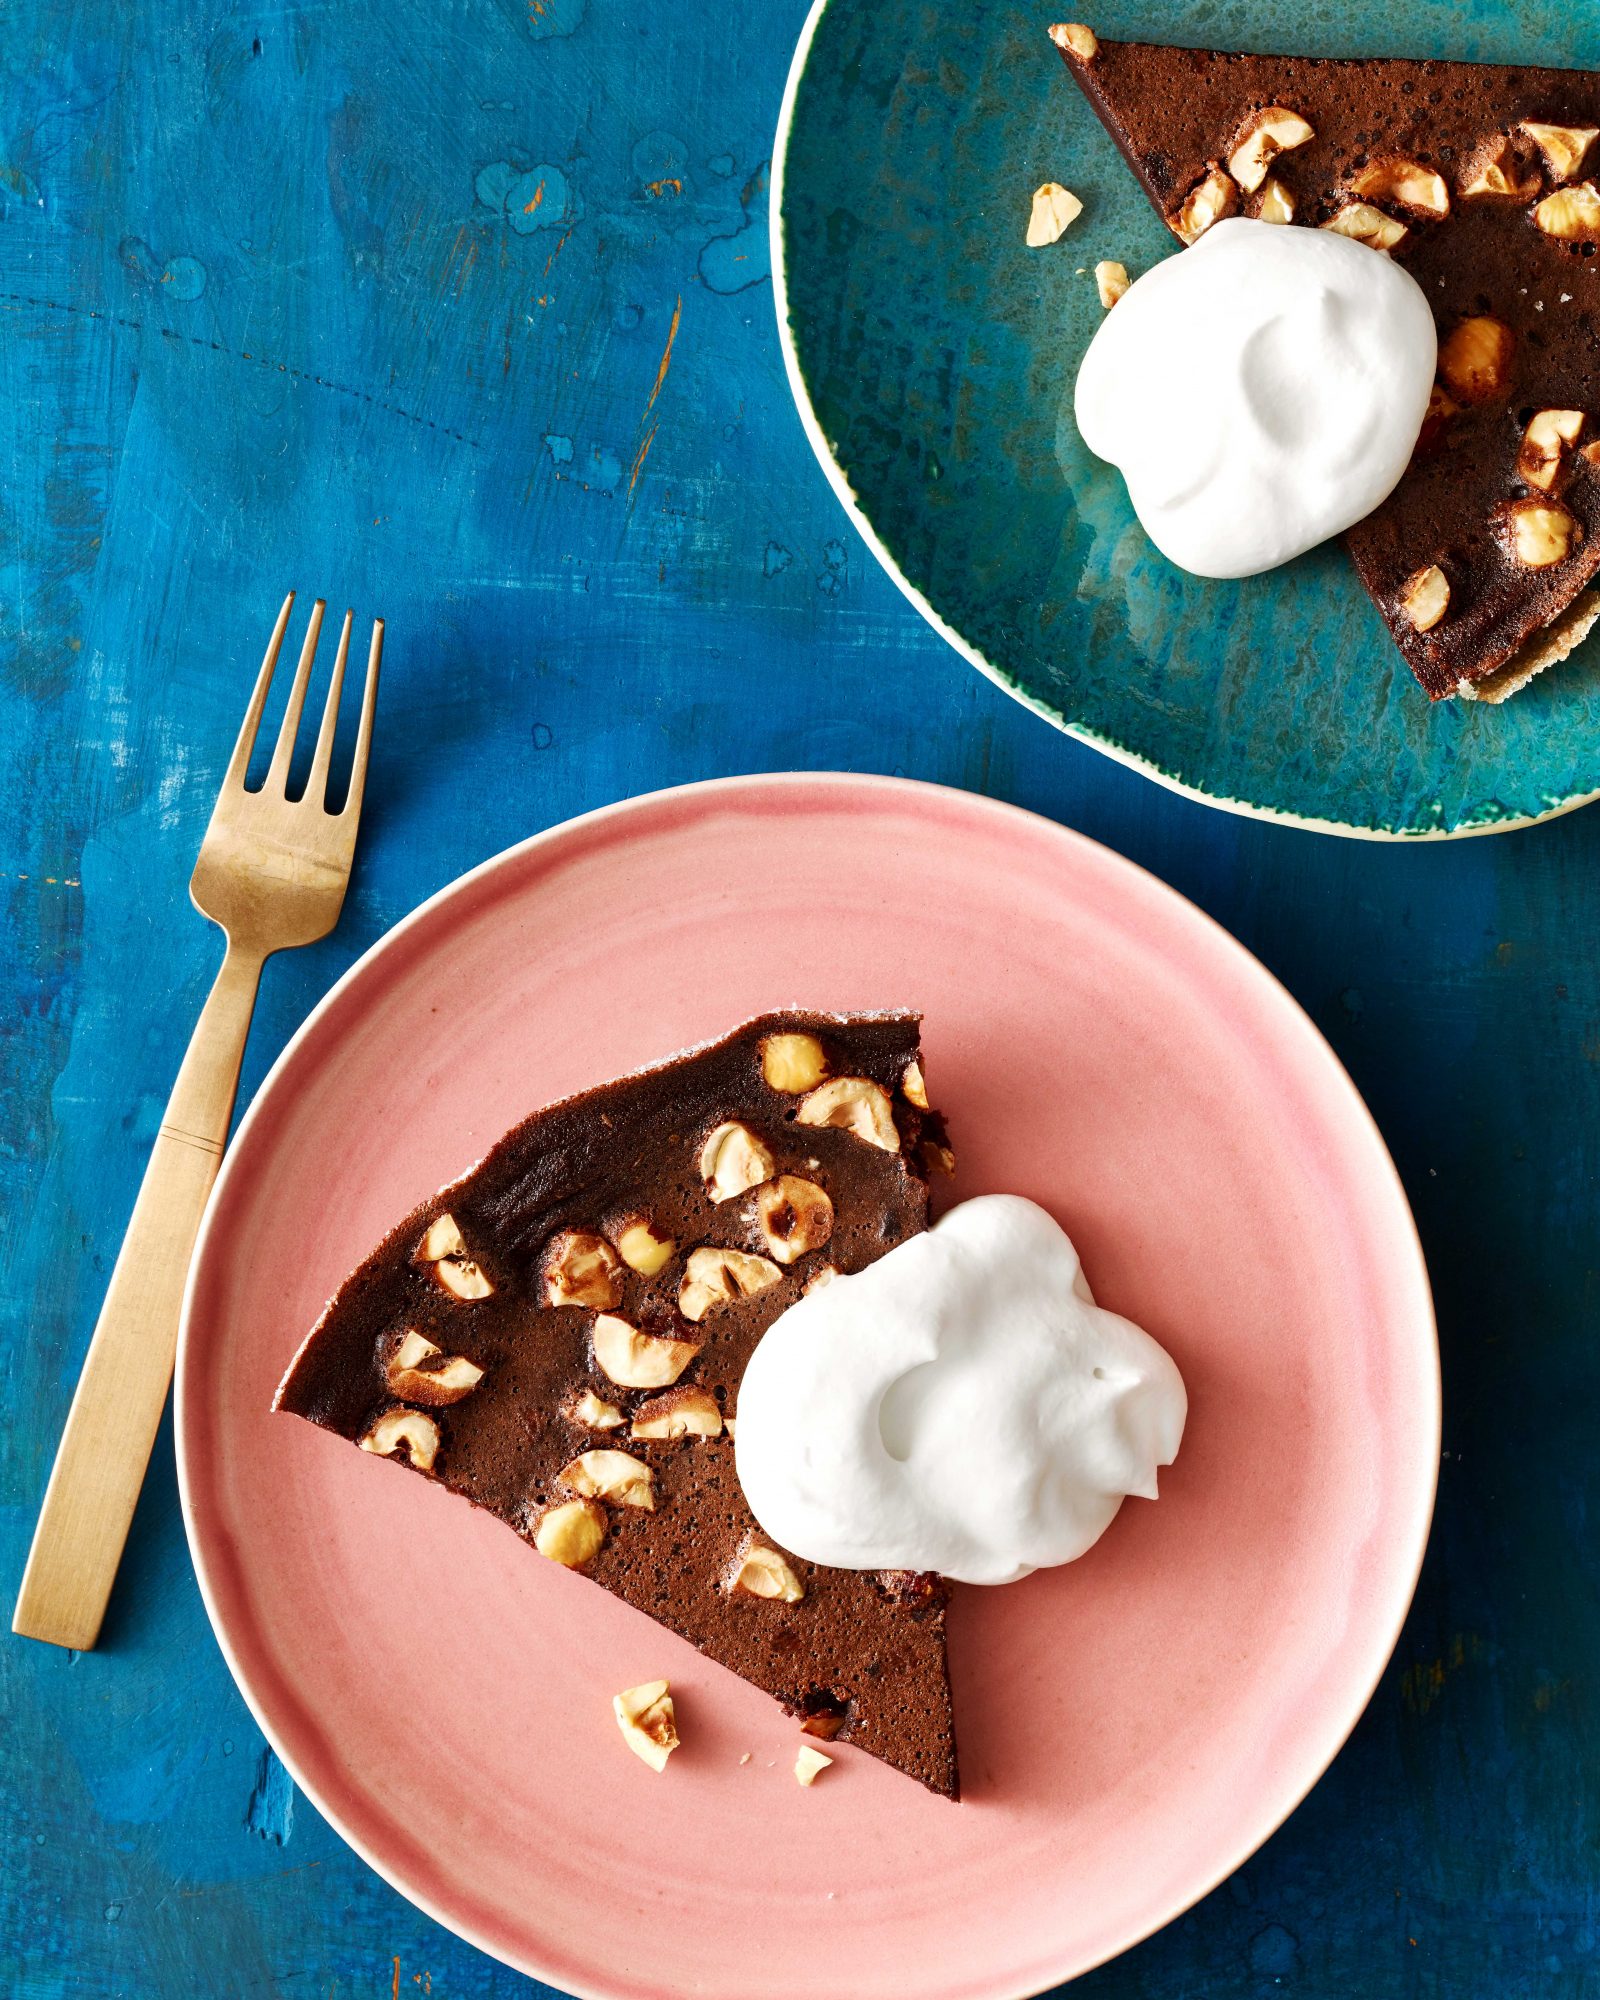 Chocolate-Hazelnut Skillet Cake